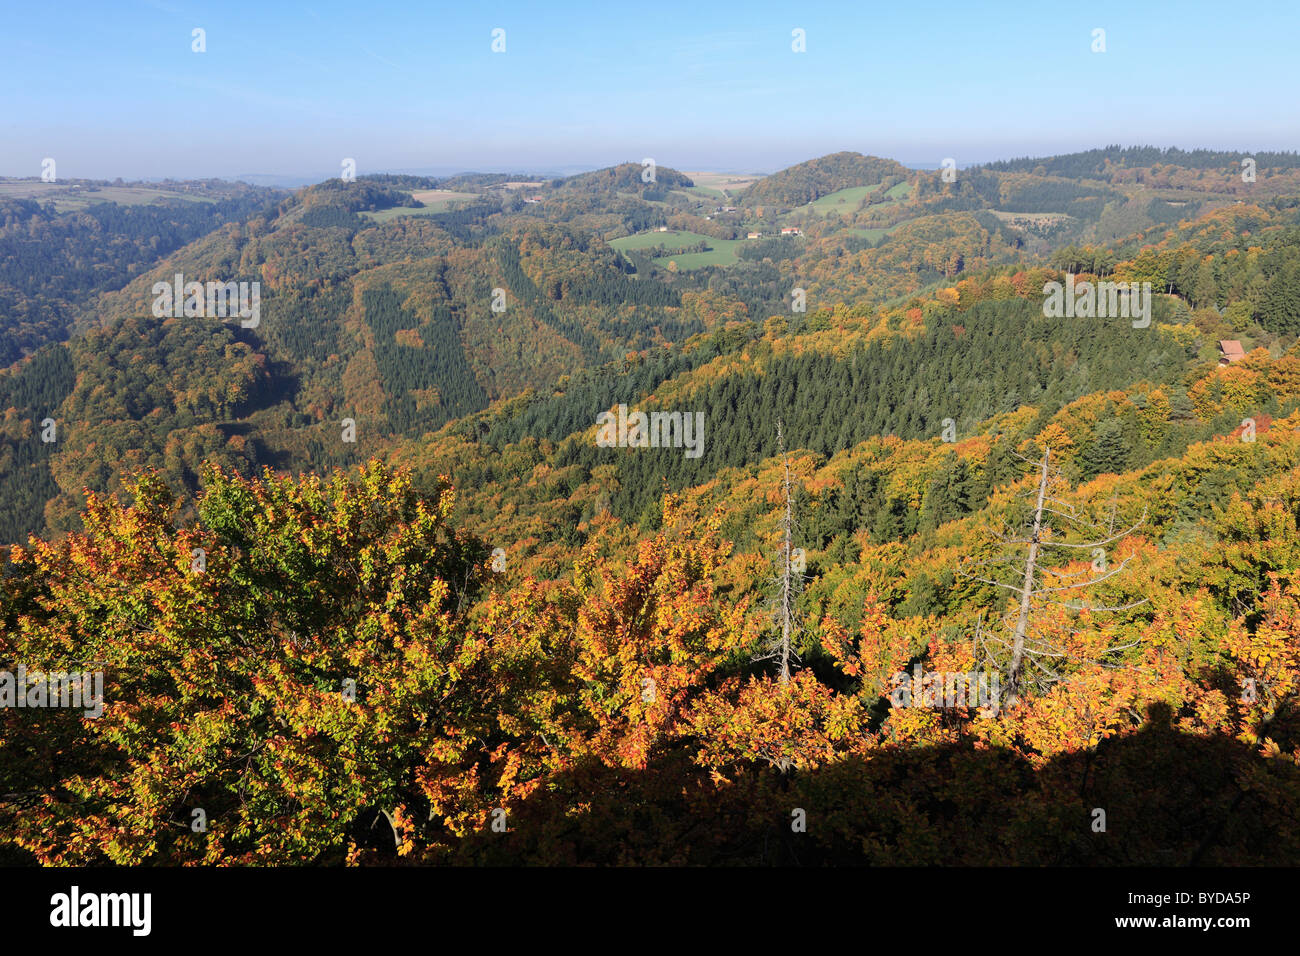 Forest in autumn, view from Gruberwarte look-out on the Buschandlwand mountain, Wachau valley, Waldviertel region, Lower Austria Stock Photo